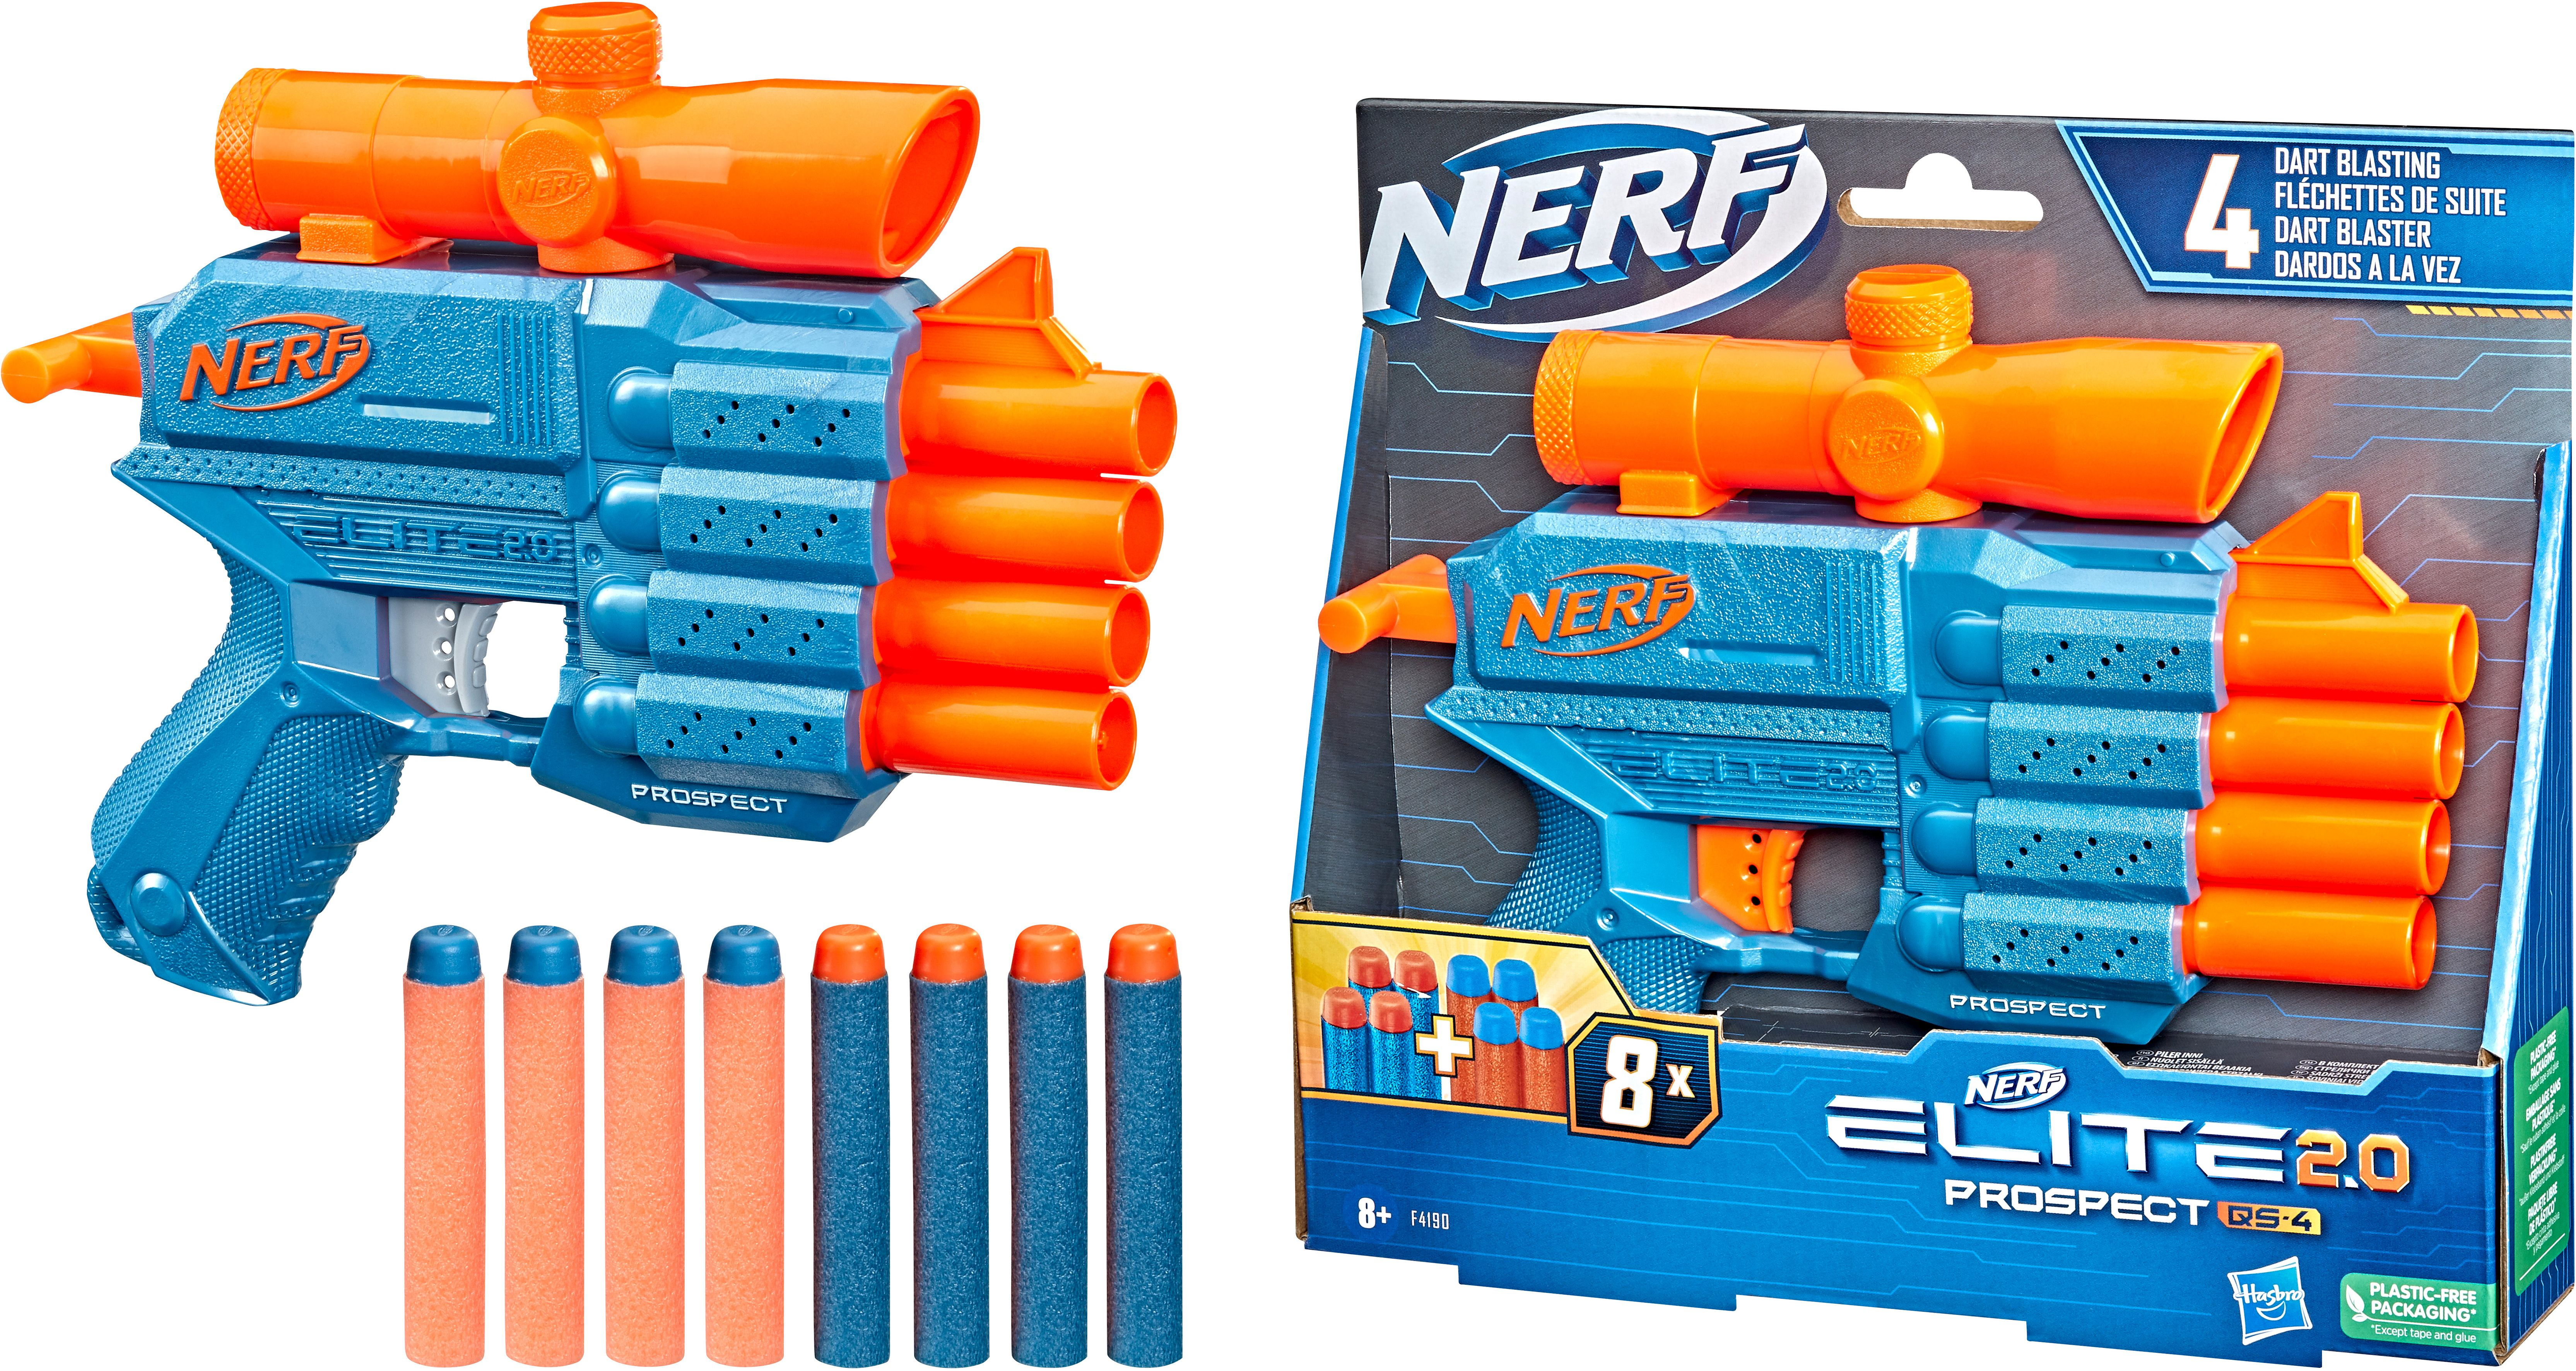 2.0 QS-3 NERF Elite Blau/Orange Nerf Blaster Prospect